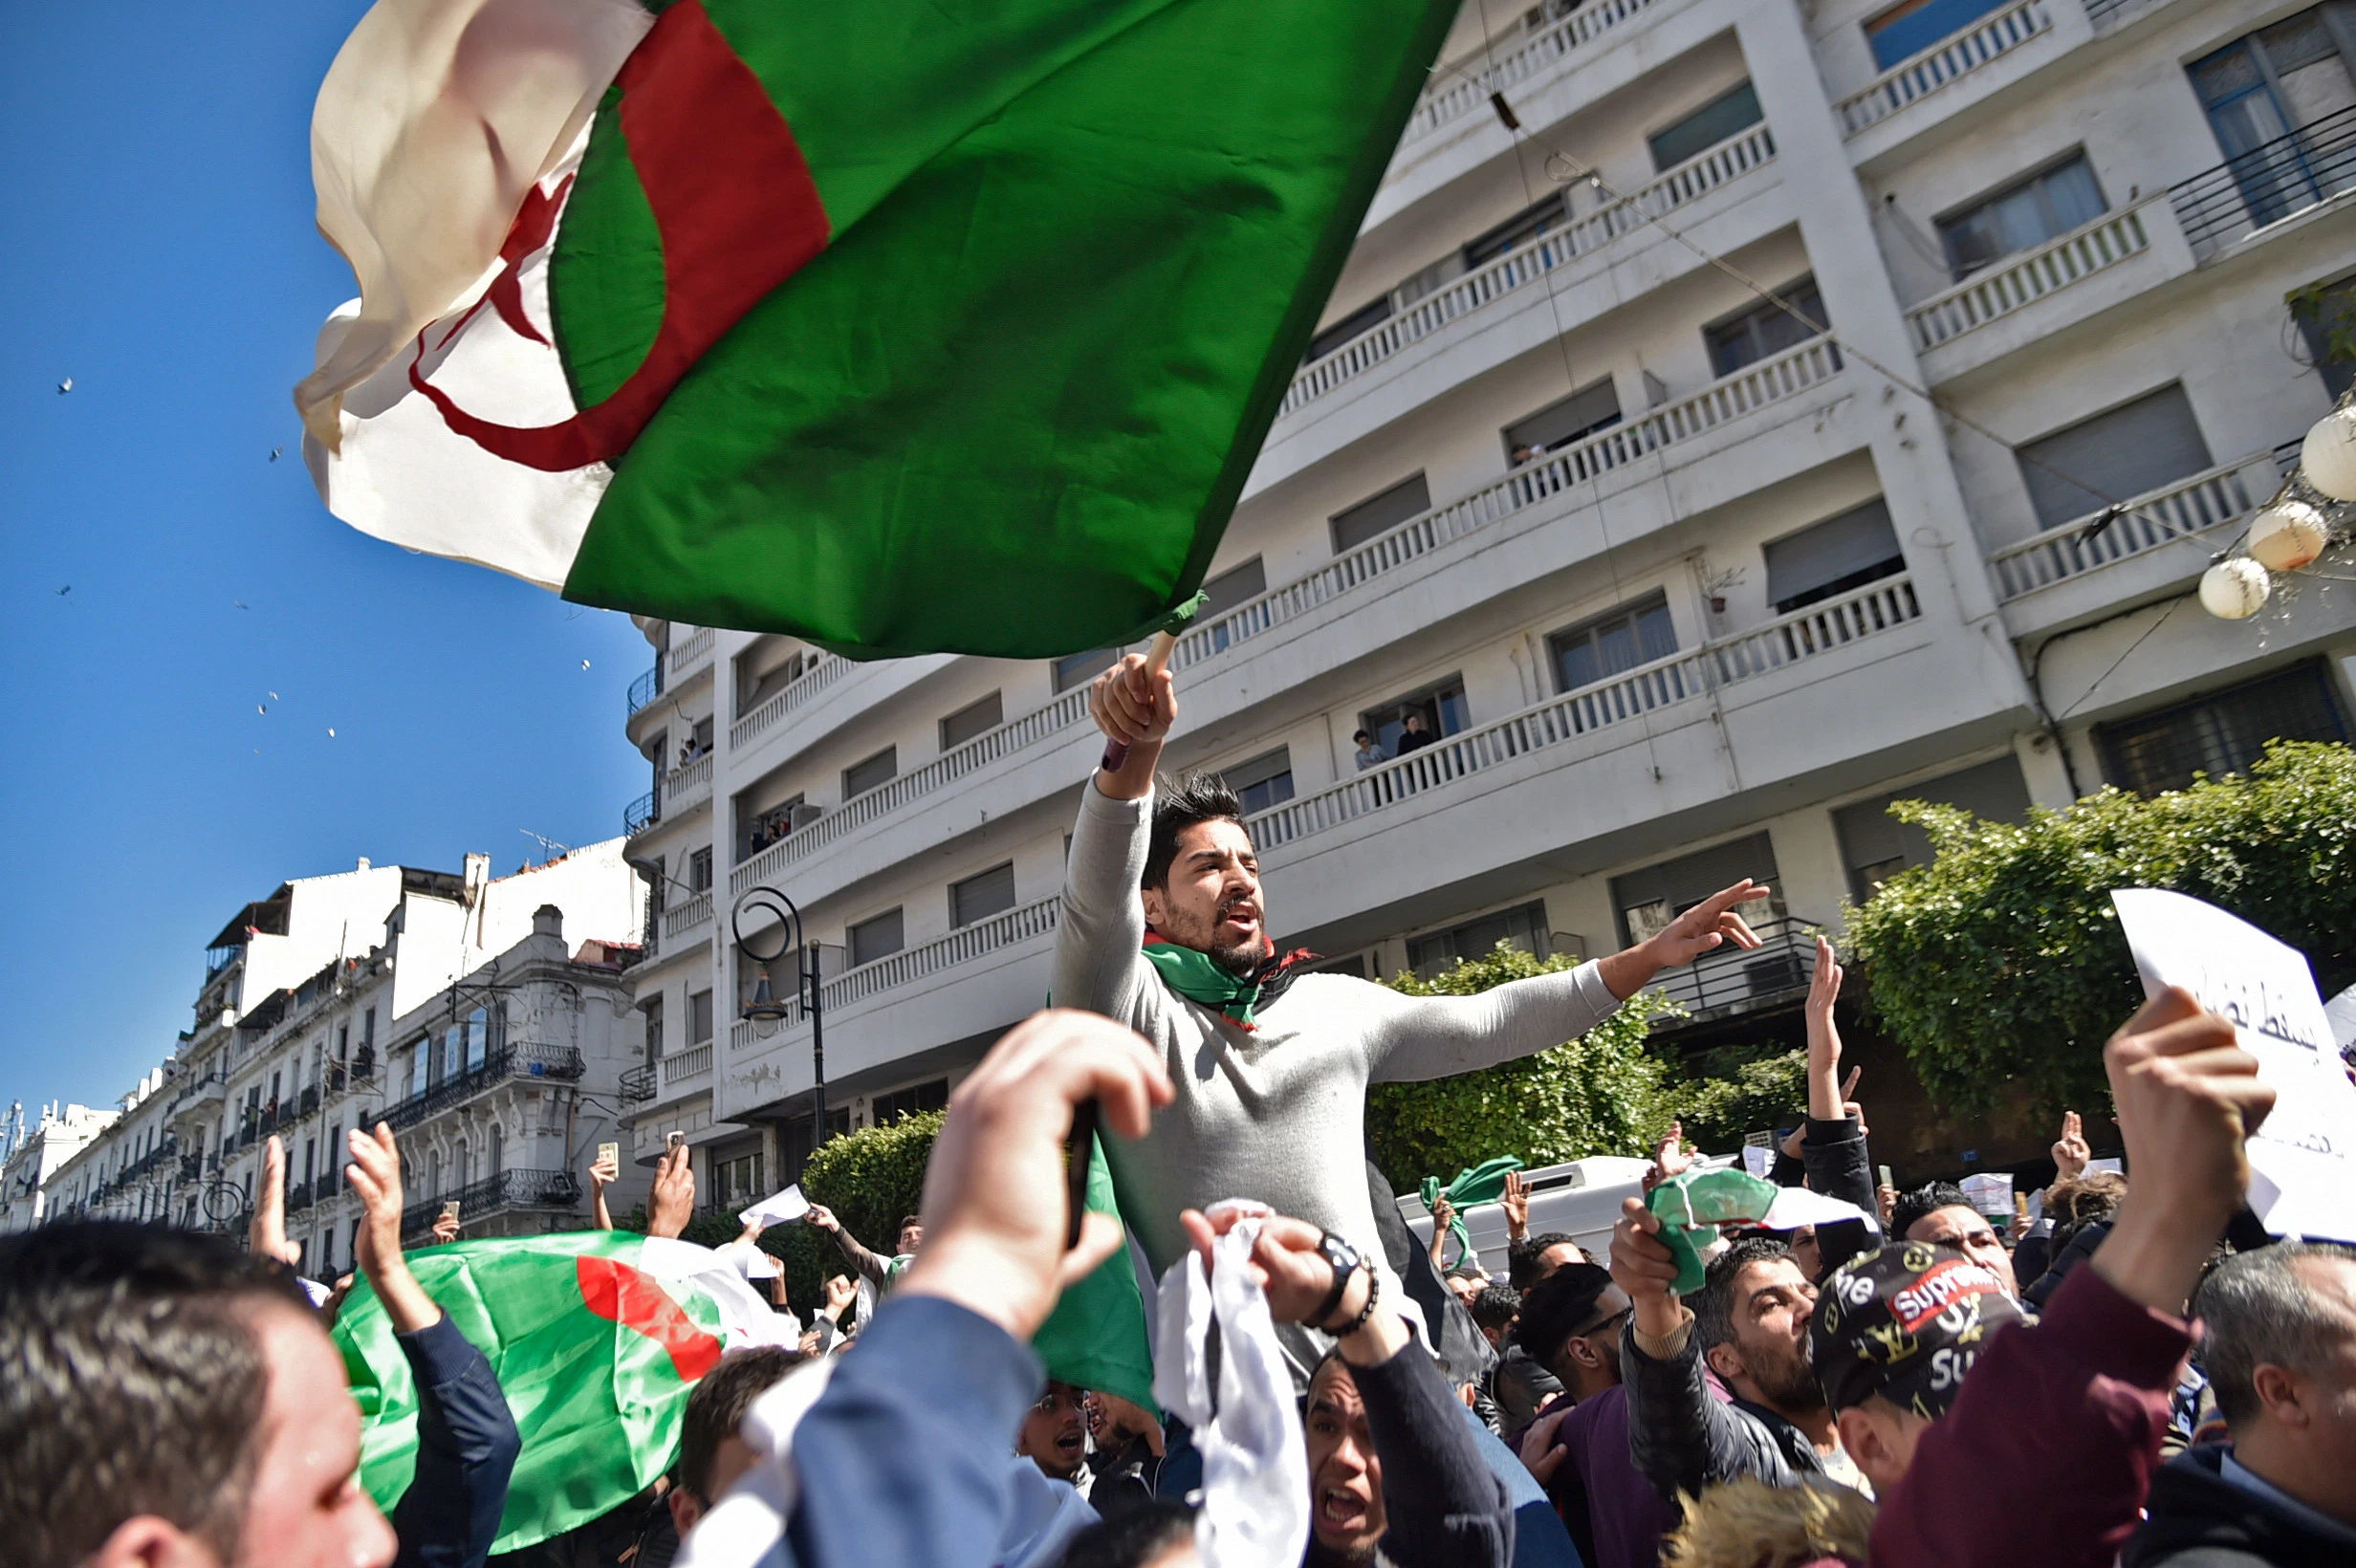 Algerians protest against former President Abdelaziz Bouteflika's bid for a fifth term in power, in Algiers on Mar. 1, 2019. RYAD KRAMDI/AFP VIA GETTY IMAGES